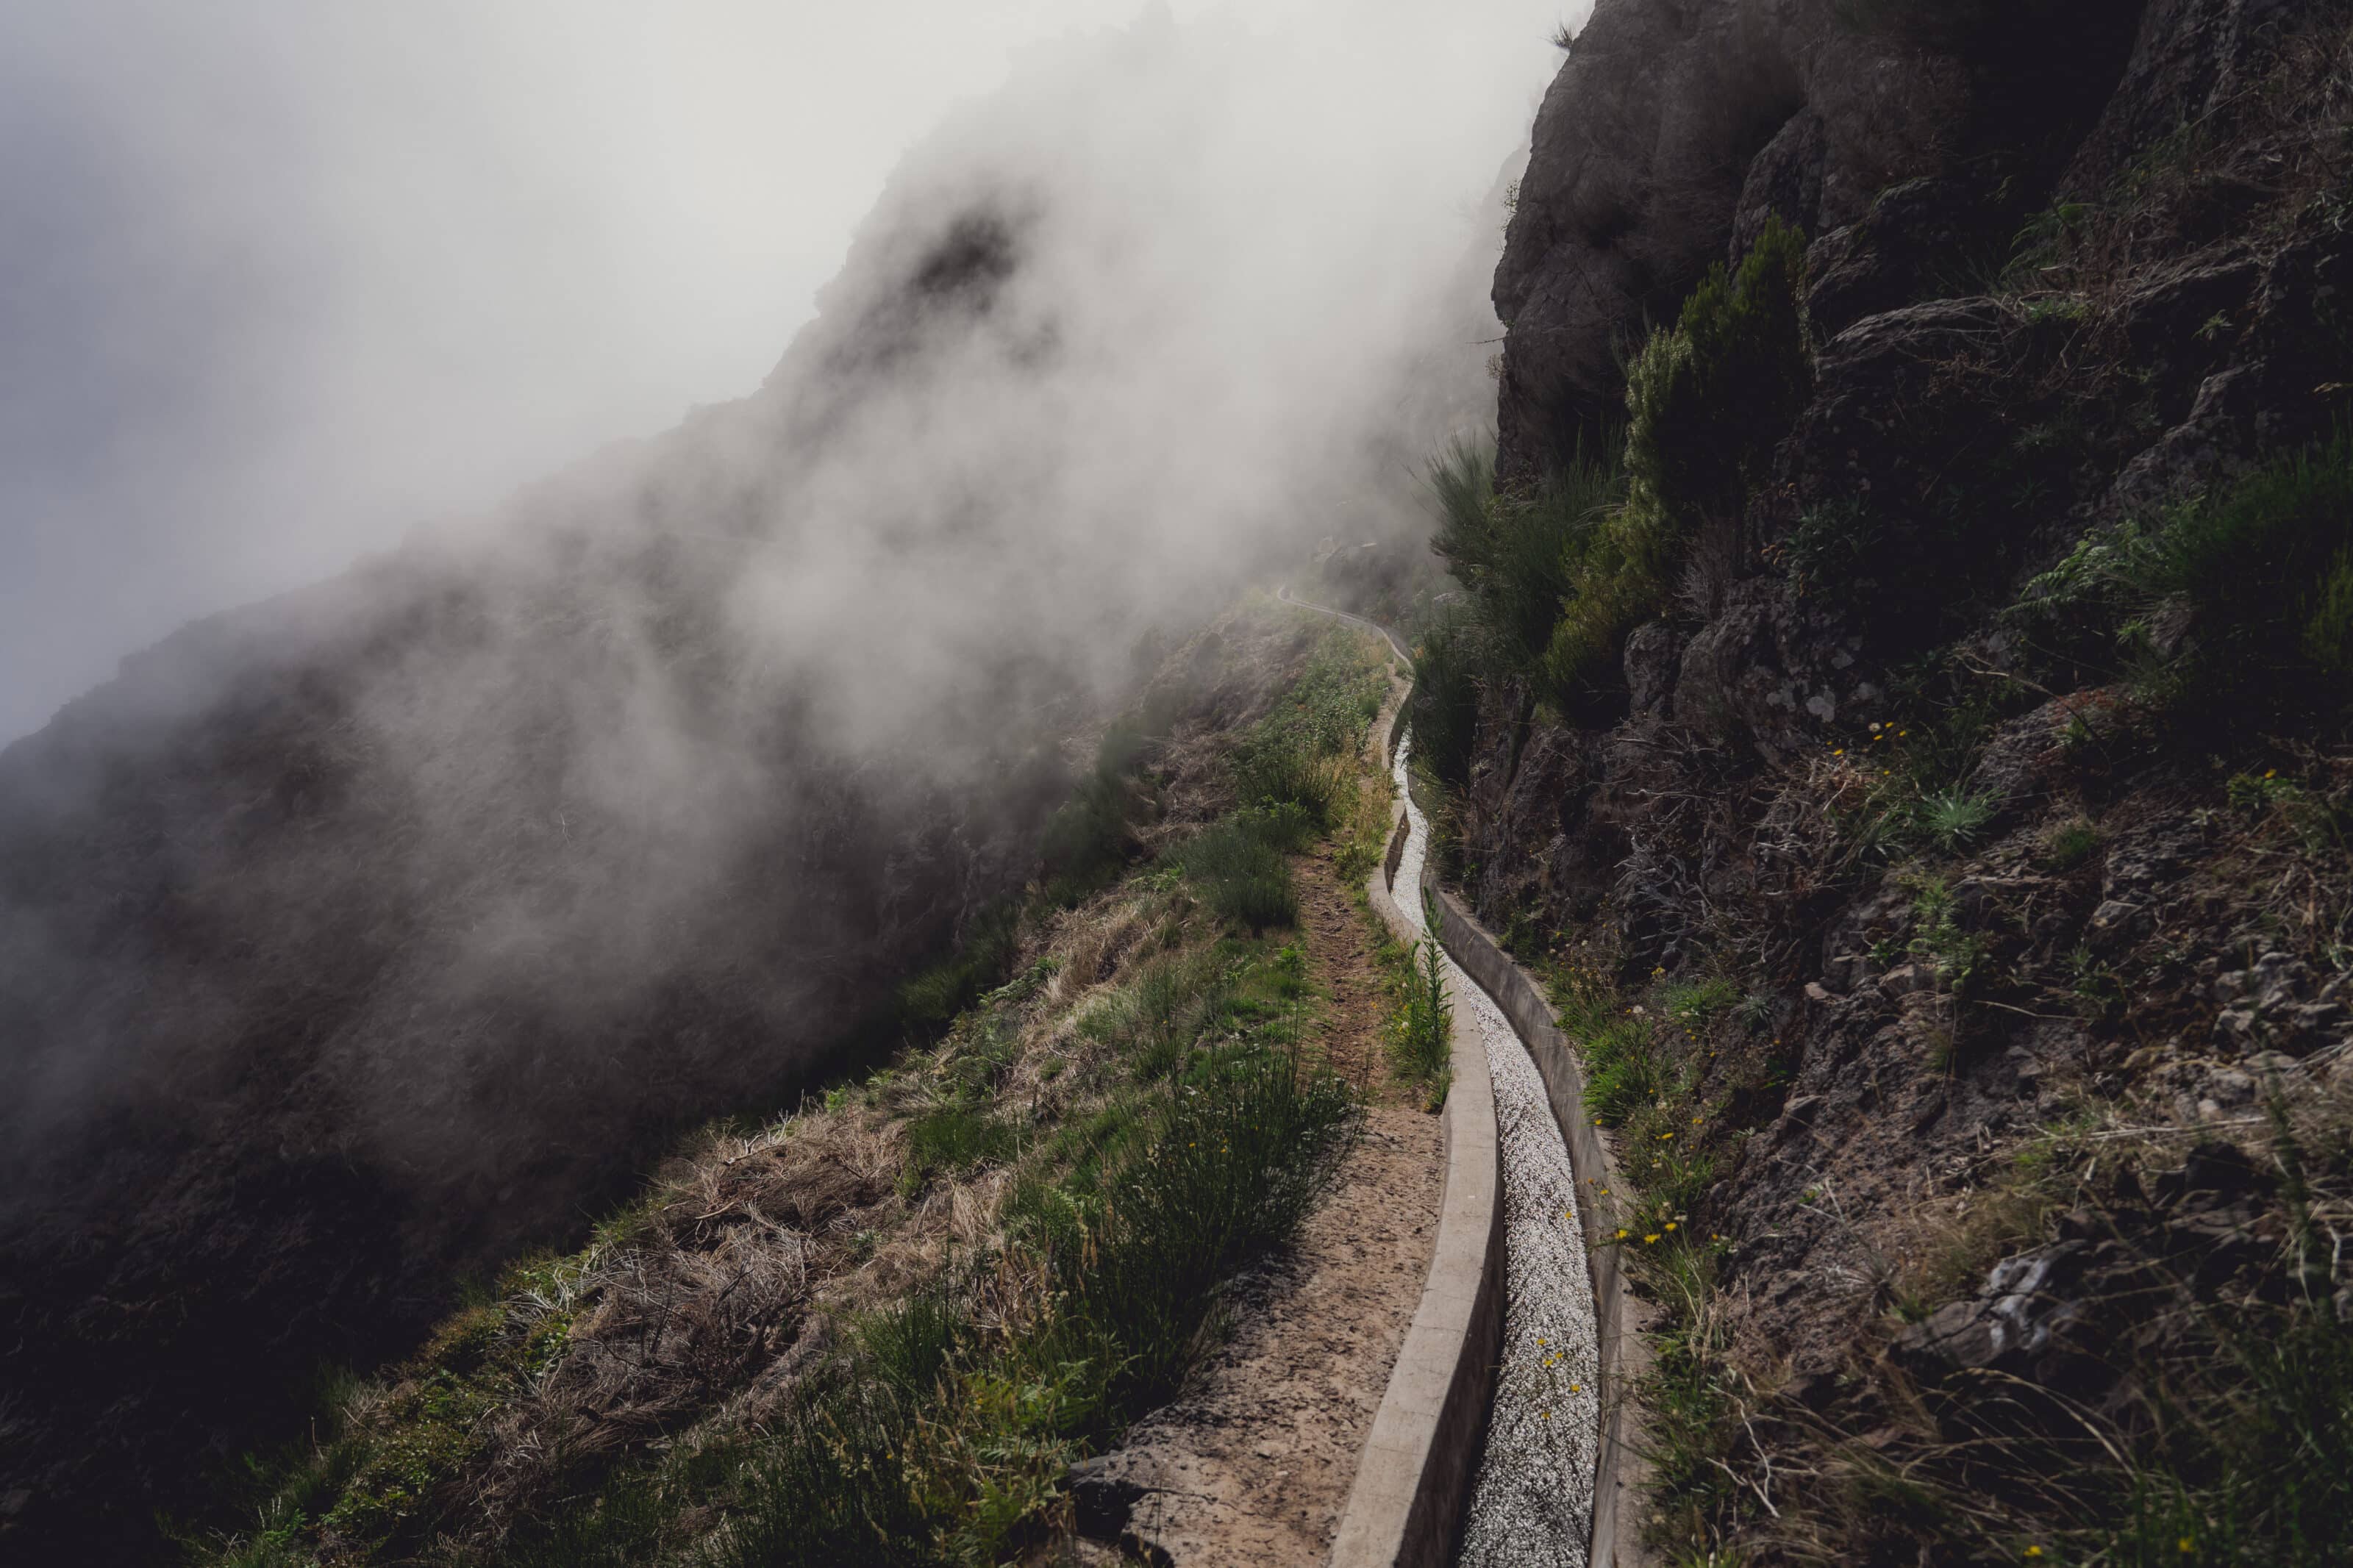 Madeira - a Photographer’s Paradise